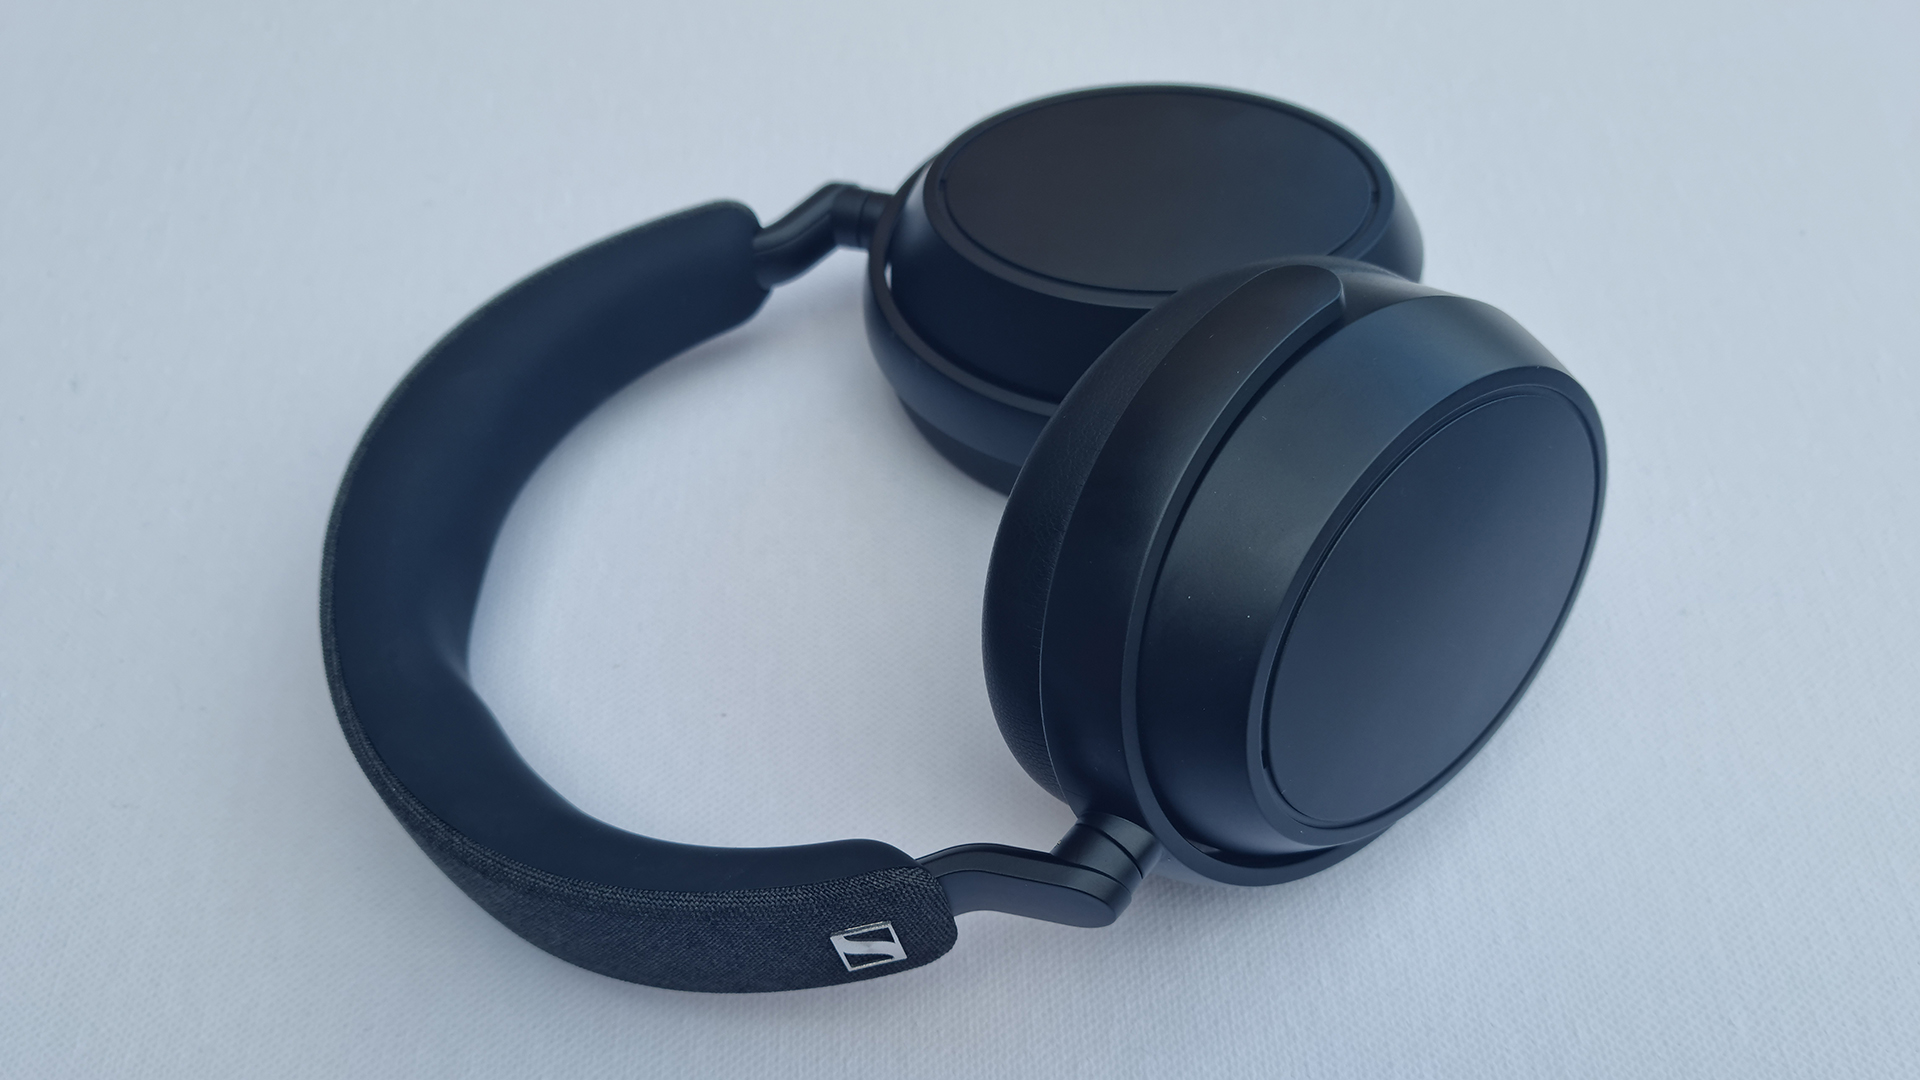 Wireless noise-cancelling headphones: Sennheiser Momentum 4 Wireless